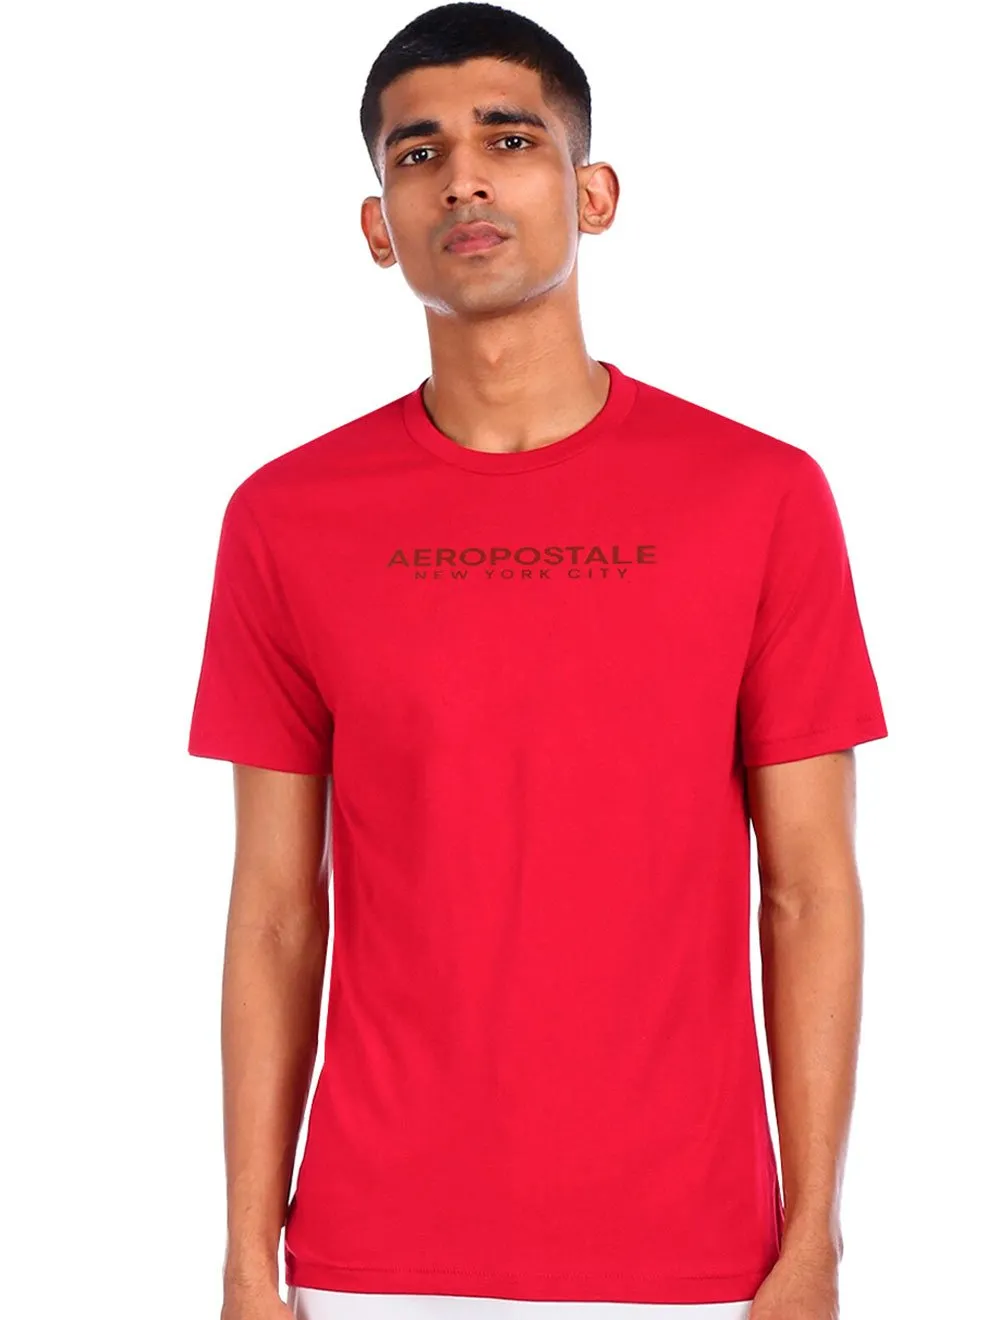 Camiseta Aeropostale Masculina Colors New York City Vermelha